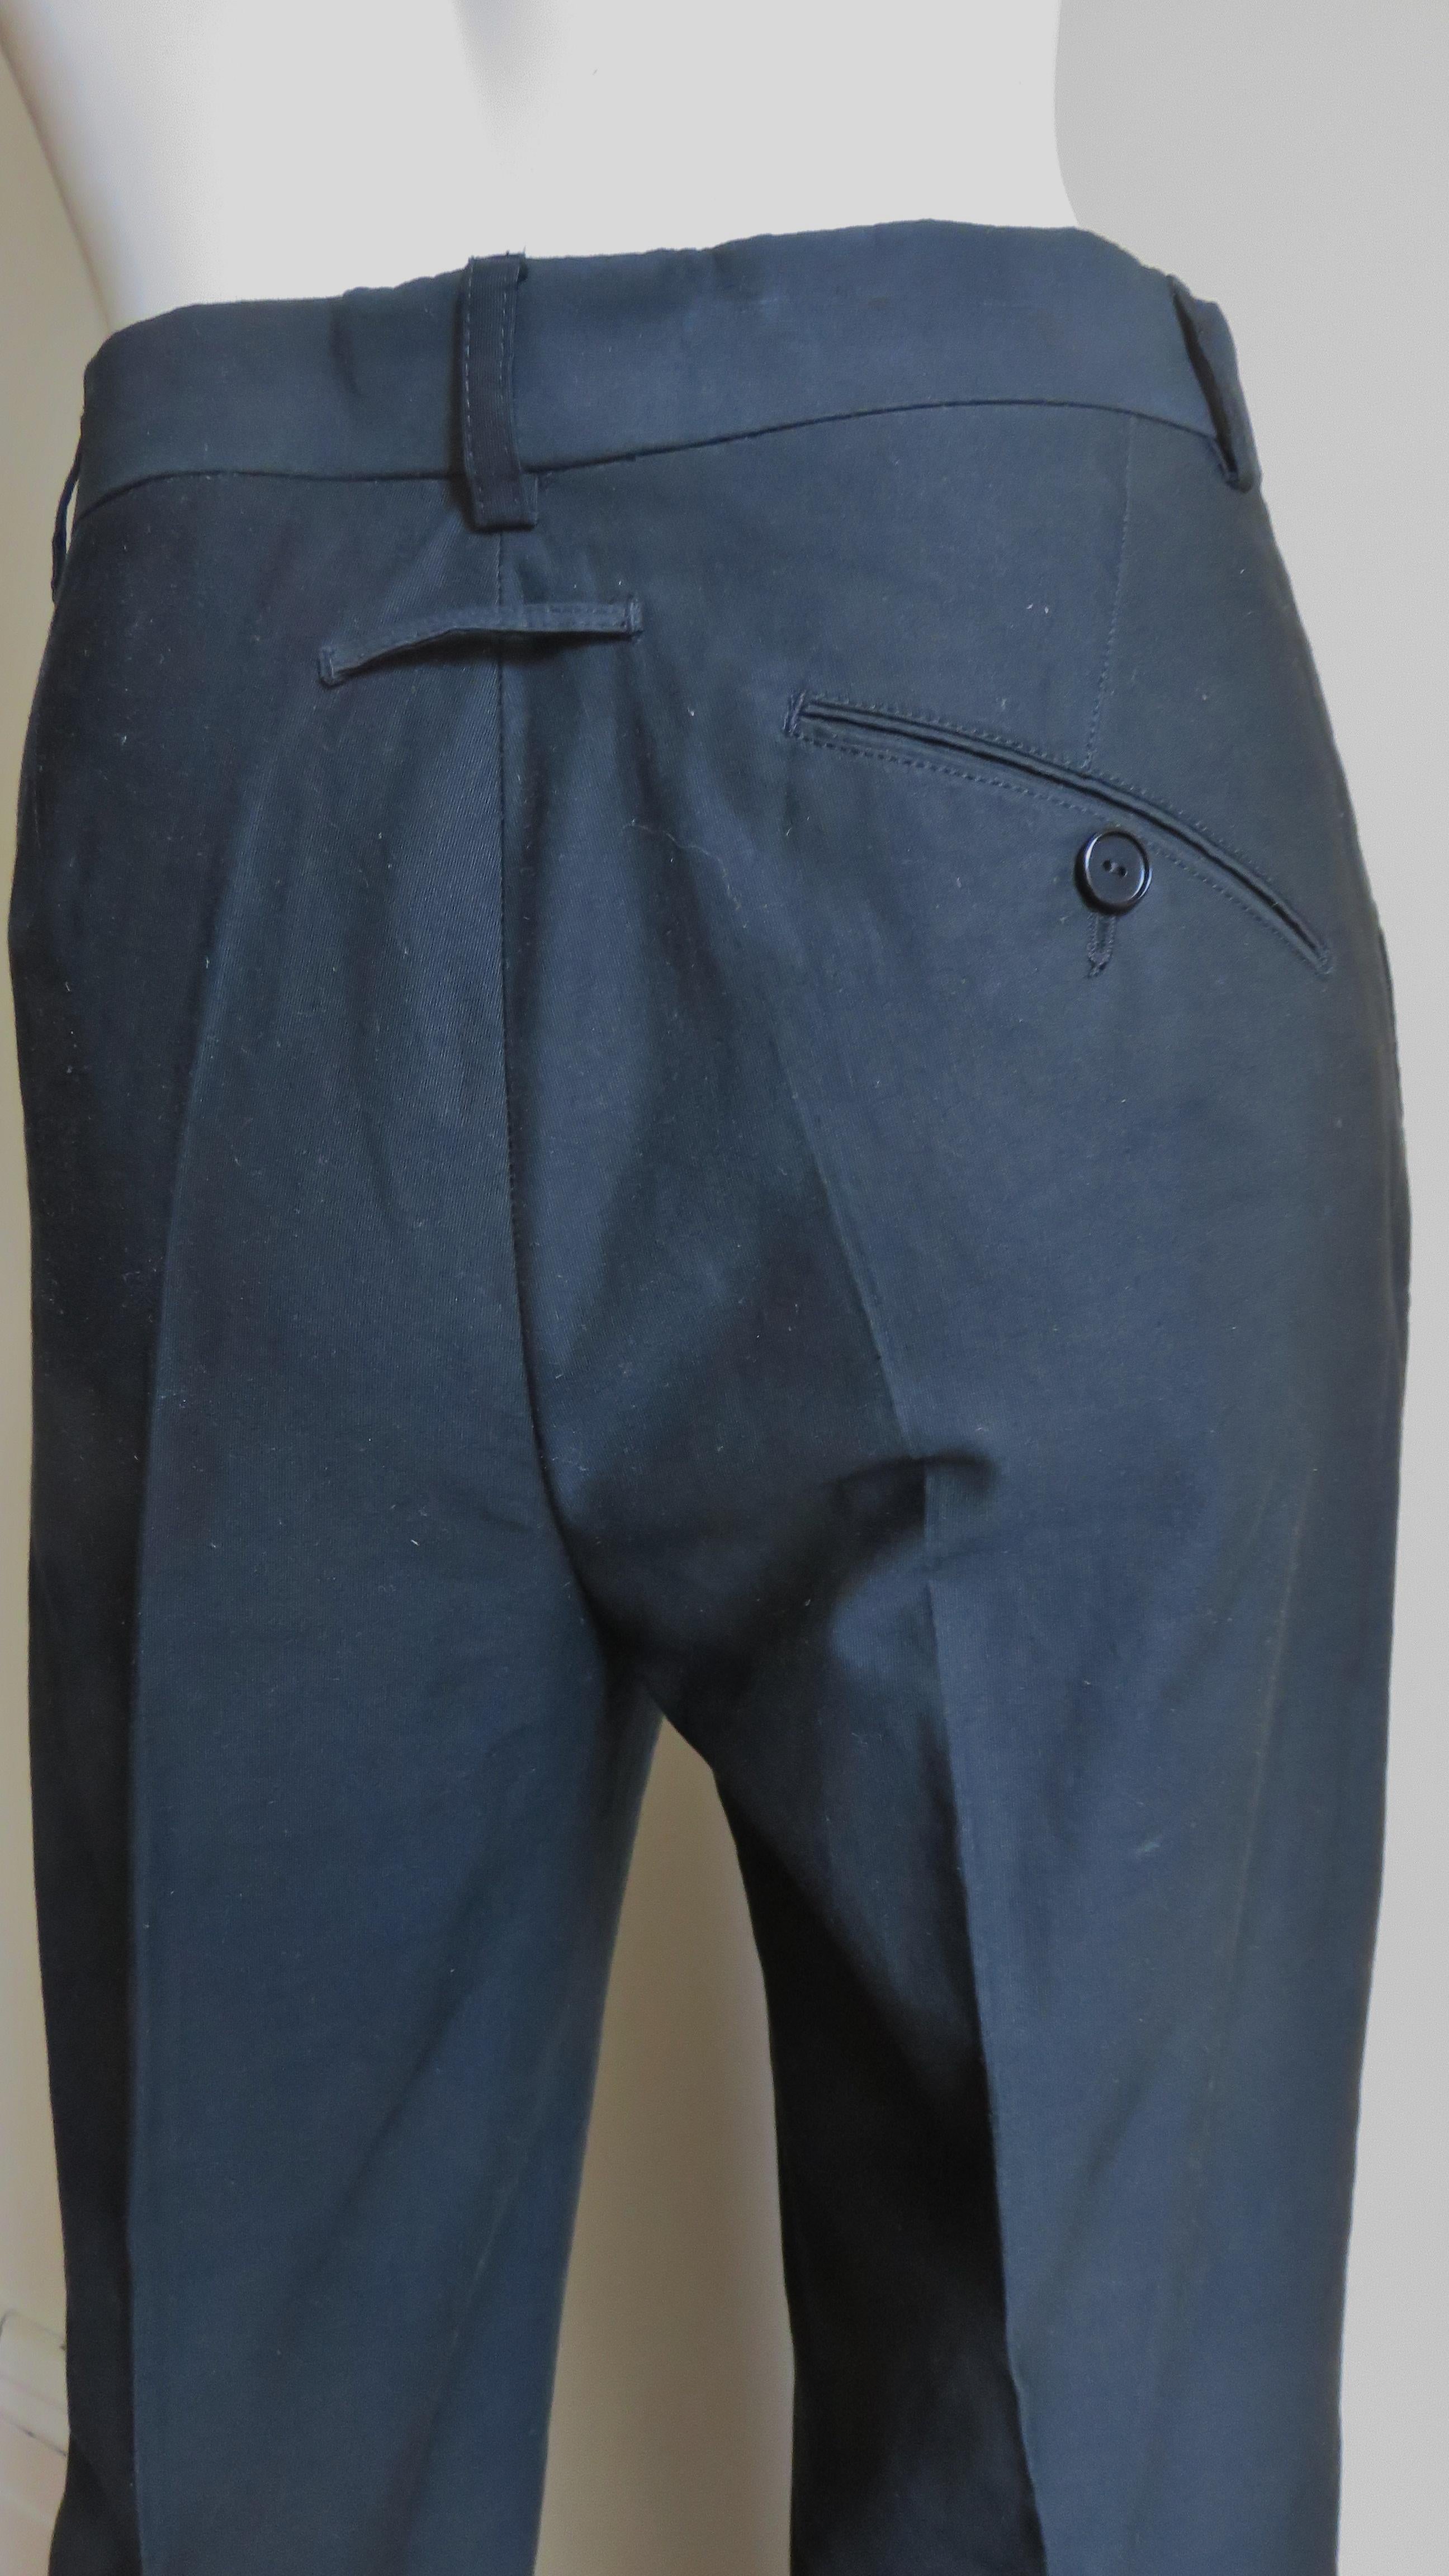 Jean Paul Gaultier Iconic Cage Corset lace up Jacket Pant Suit S/S 1989 For Sale 13